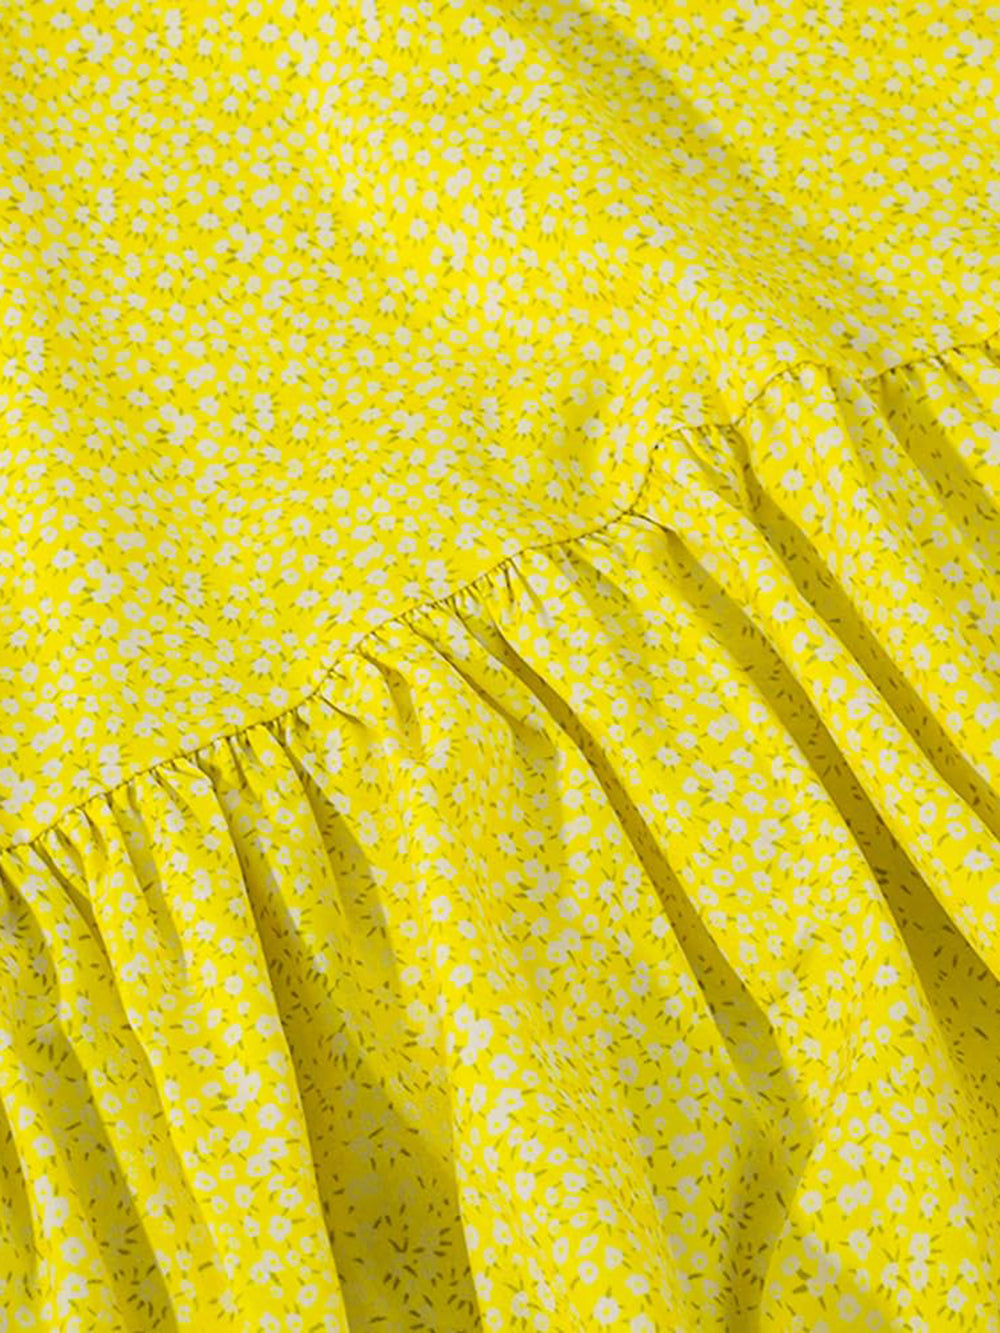 Full Size Floral Print Mini Cami Dress with Flounce Hem